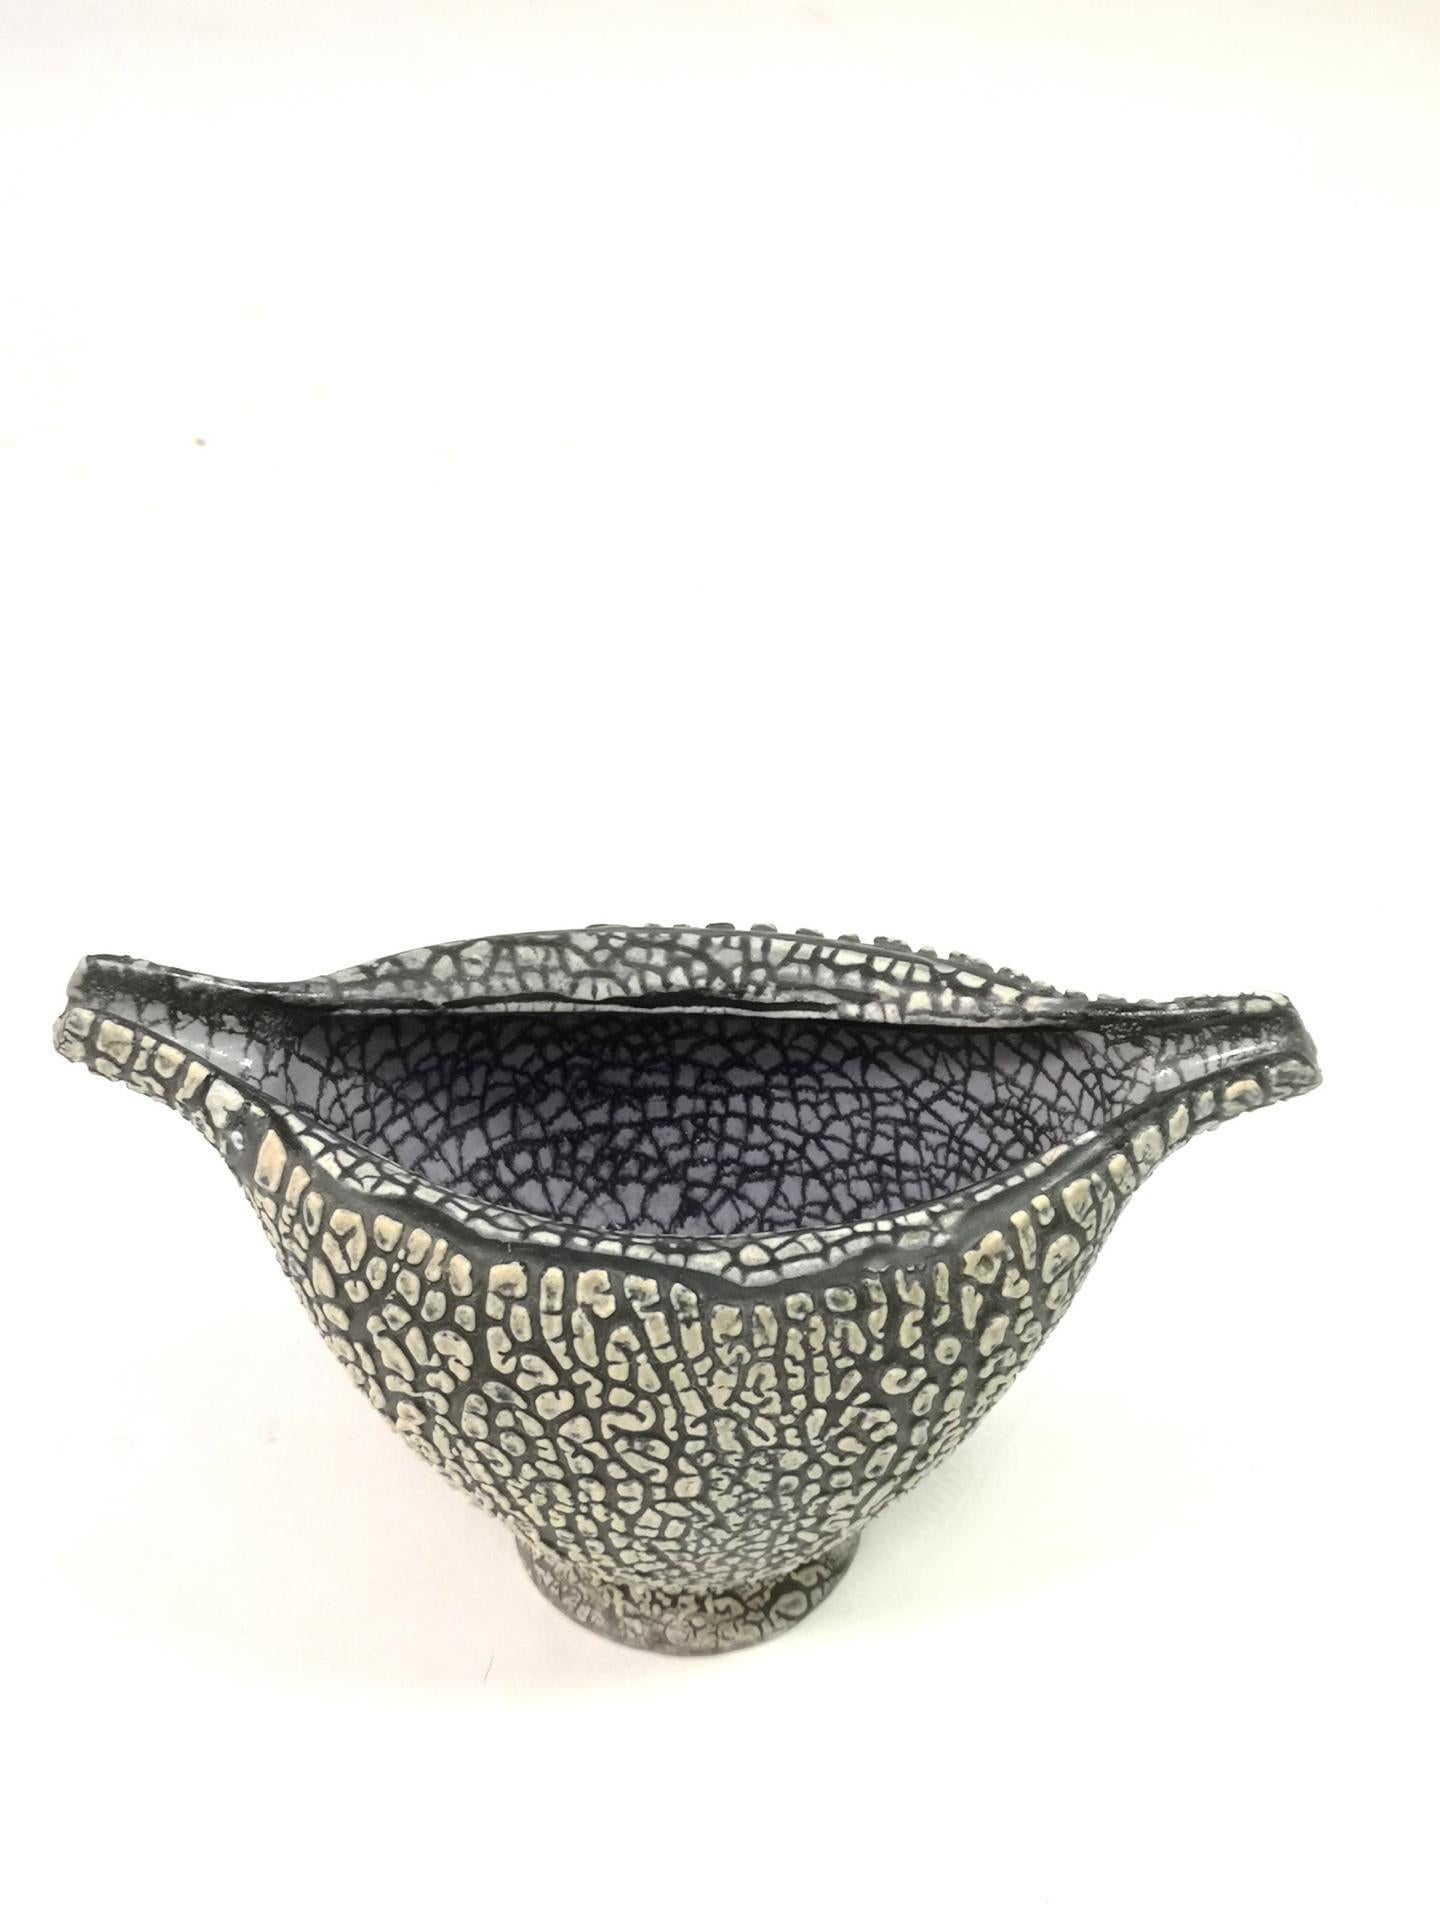 Decorative mid-century ceramic bowl by ceramicist Geza Gorka, 1960's. Signed on the base 